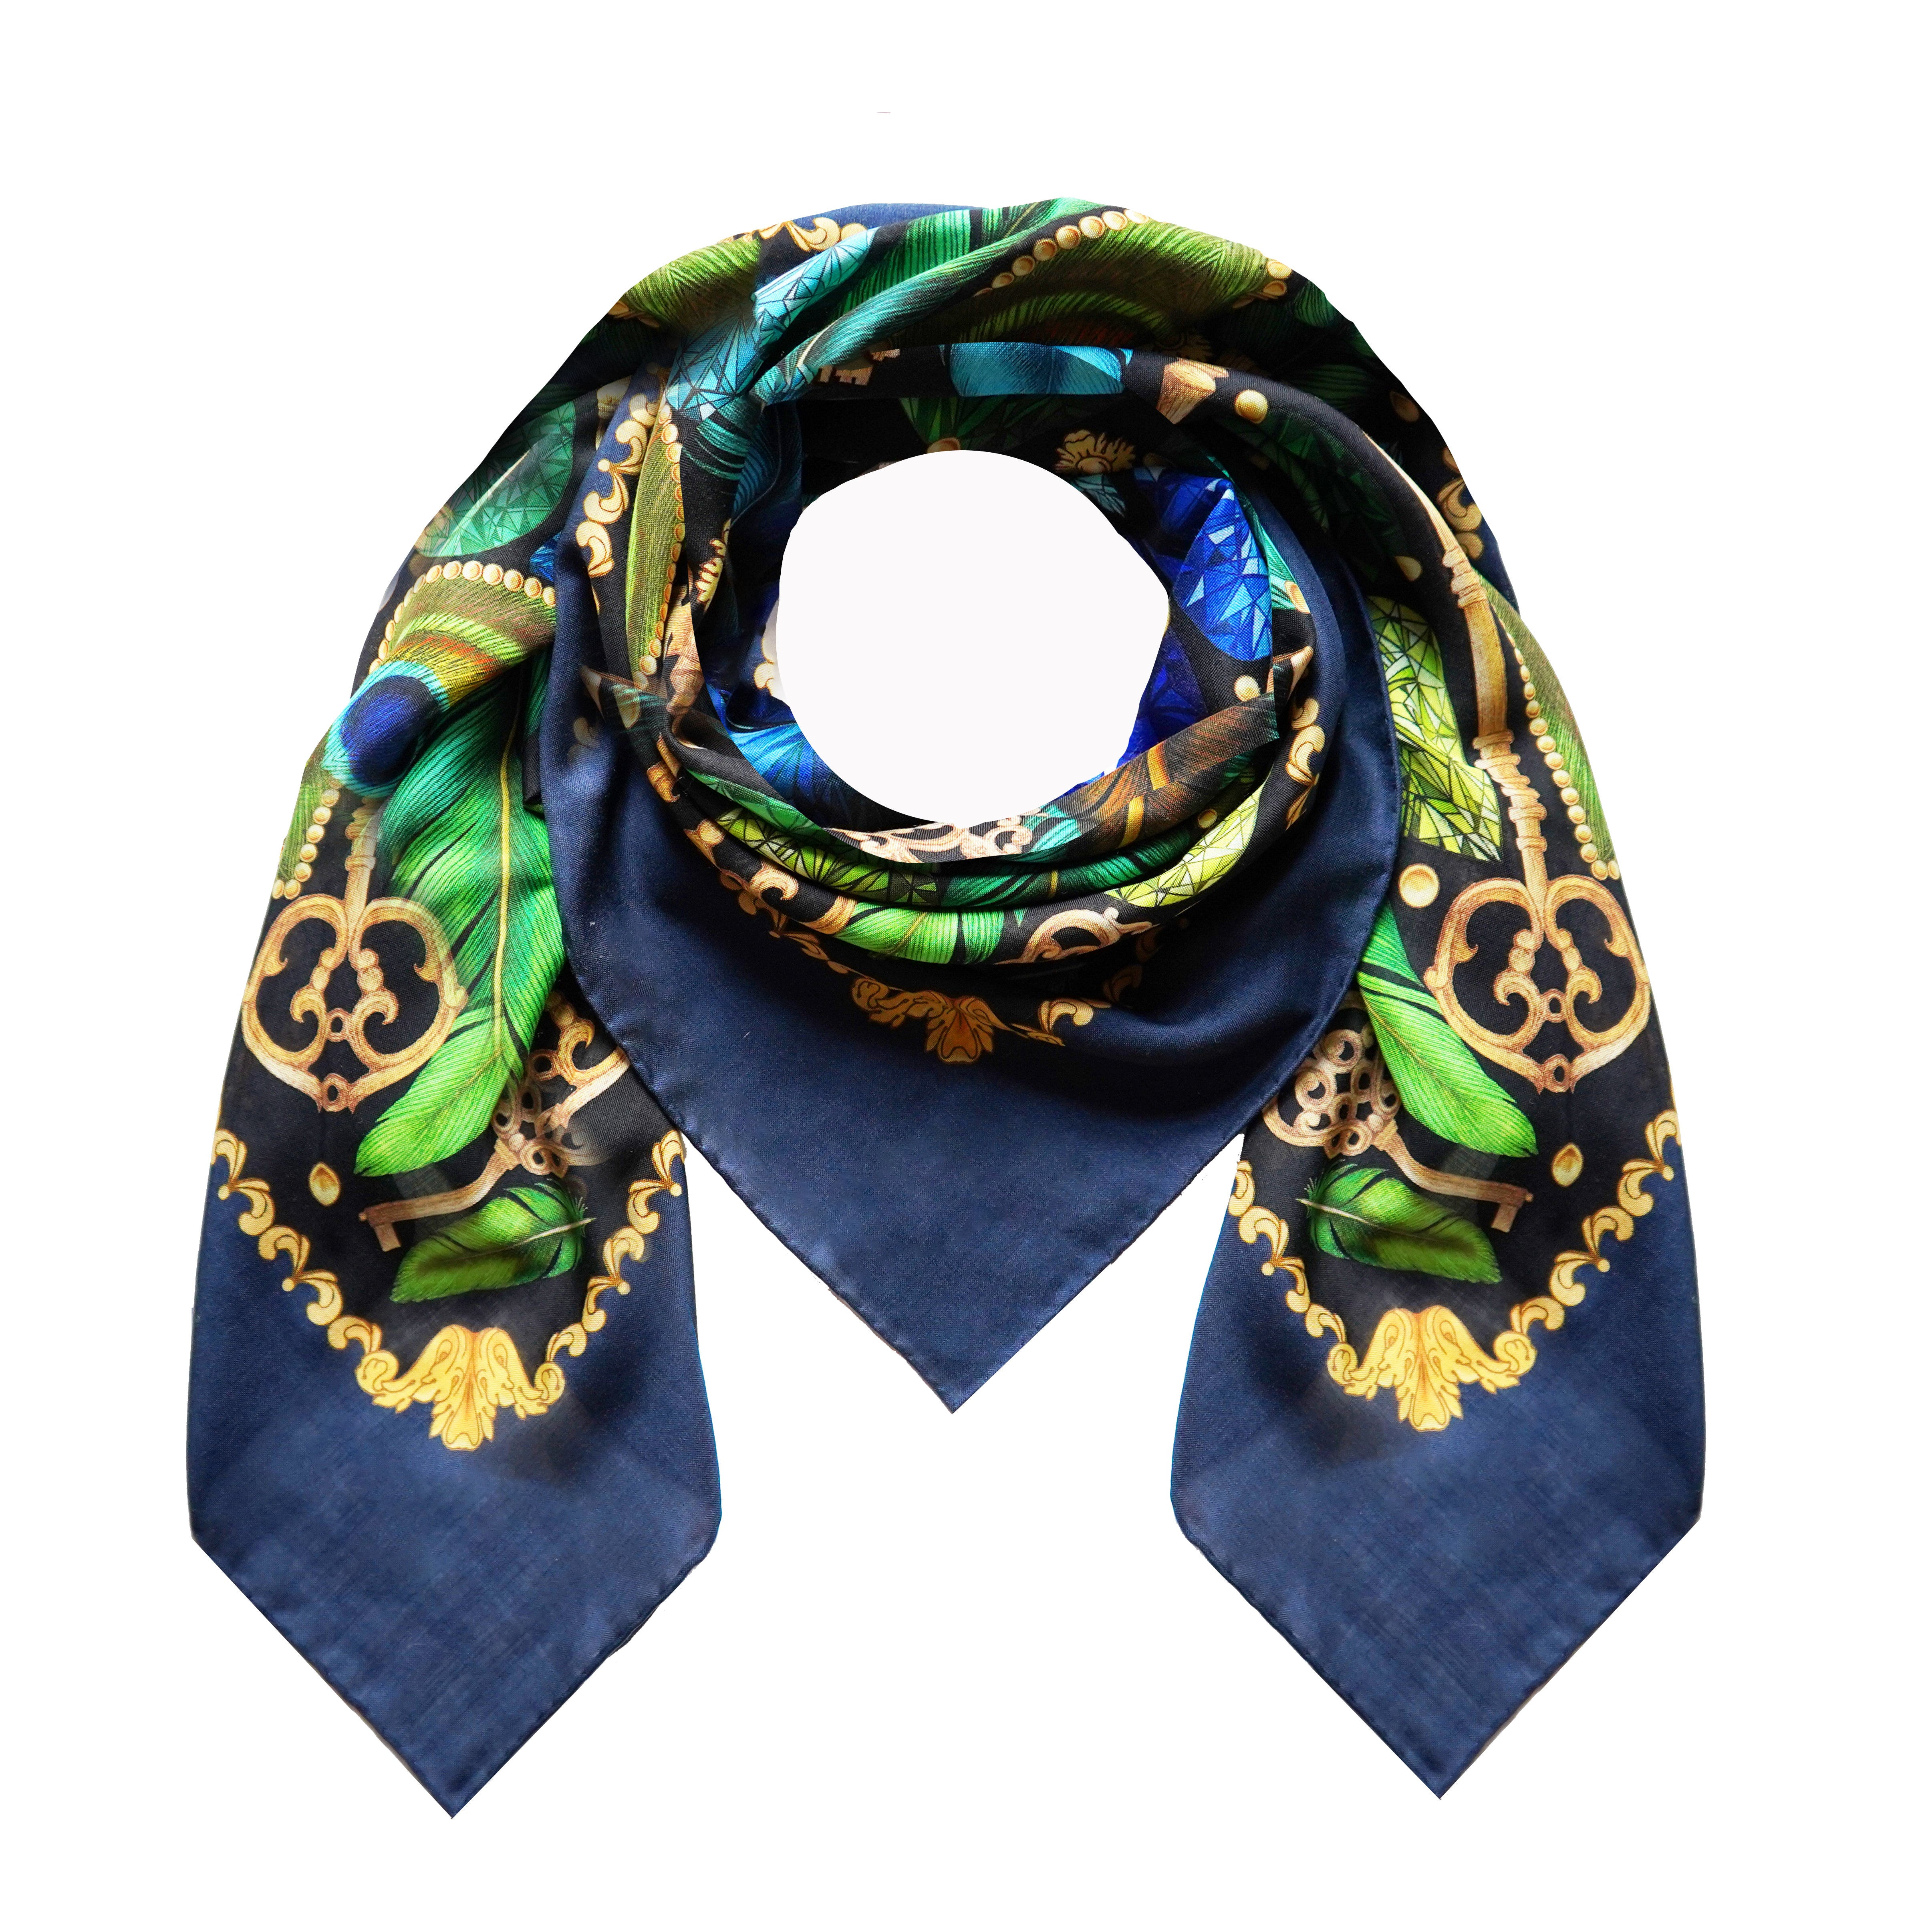 The Iridescent Jewel Silk Scarf | Wool/Silk | 130x130cm [Preorder]